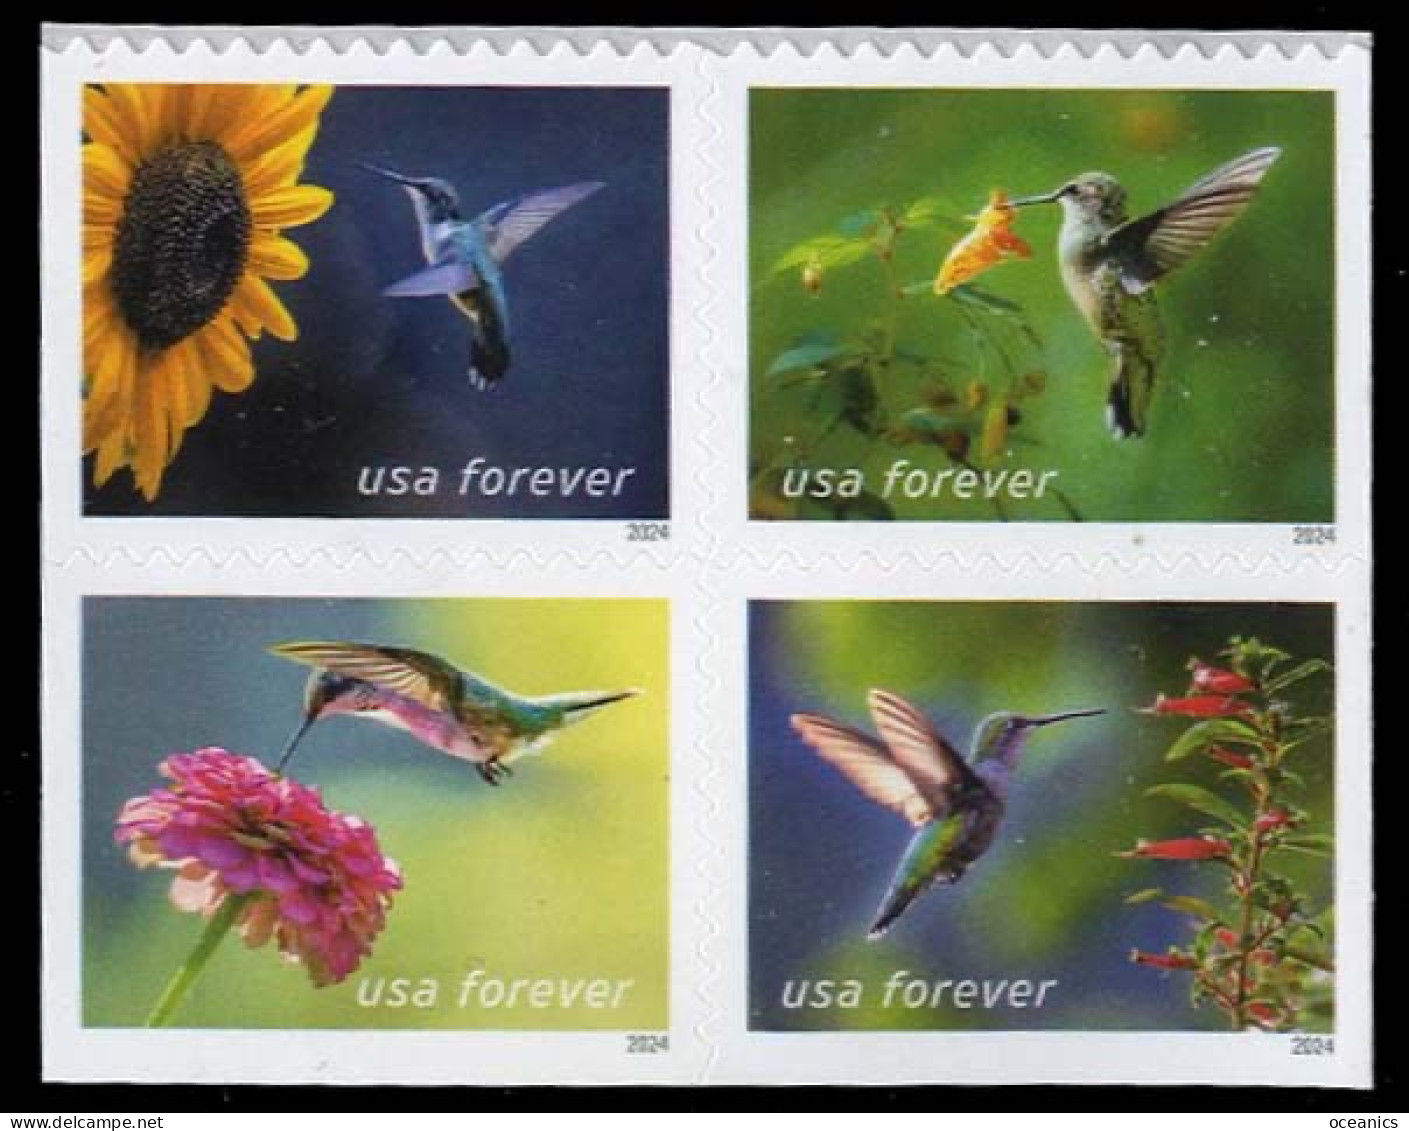 Etats-Unis / United States (Scott No.5848a - Garden Delights Forever Stamps) [**] Bloc Of 4 - Ungebraucht